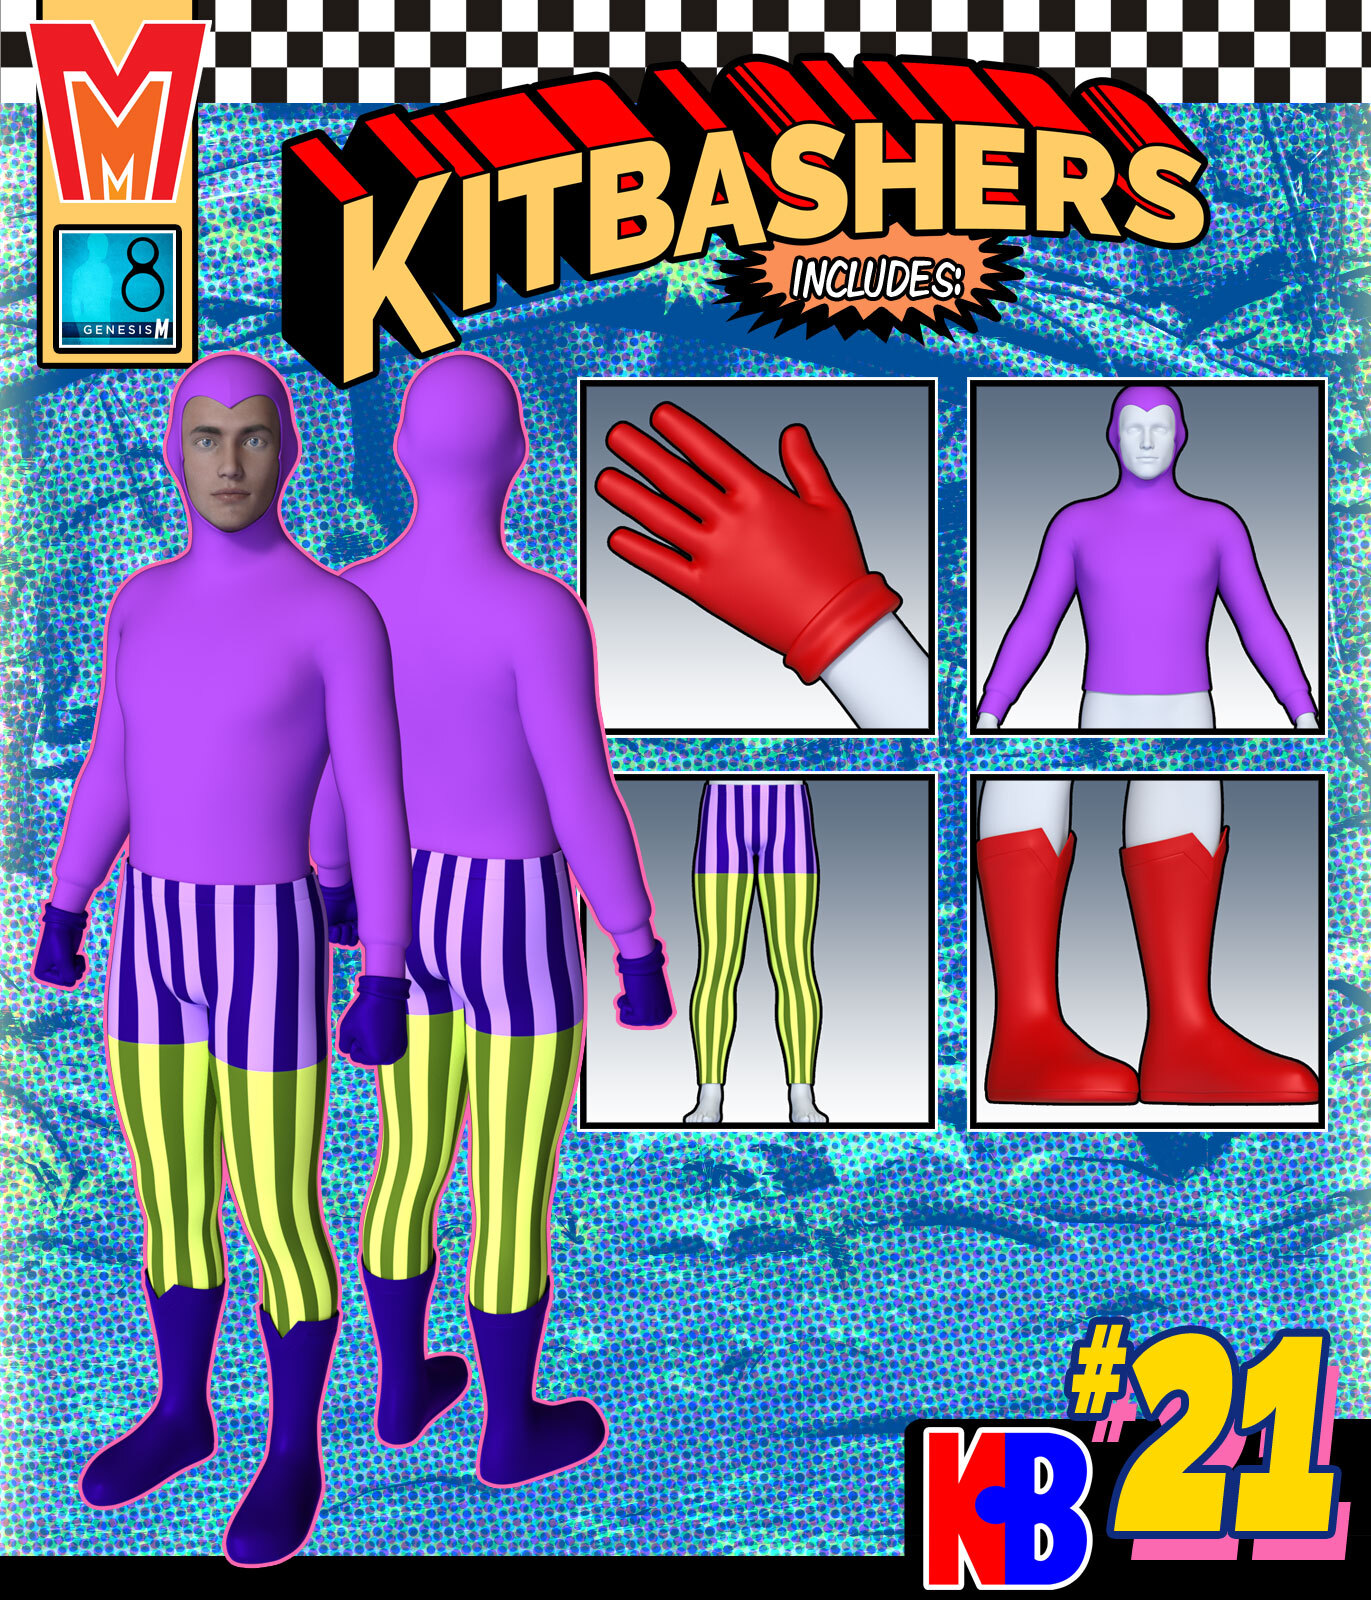 Kitbashers 021 MMG8M by: MightyMite, 3D Models by Daz 3D